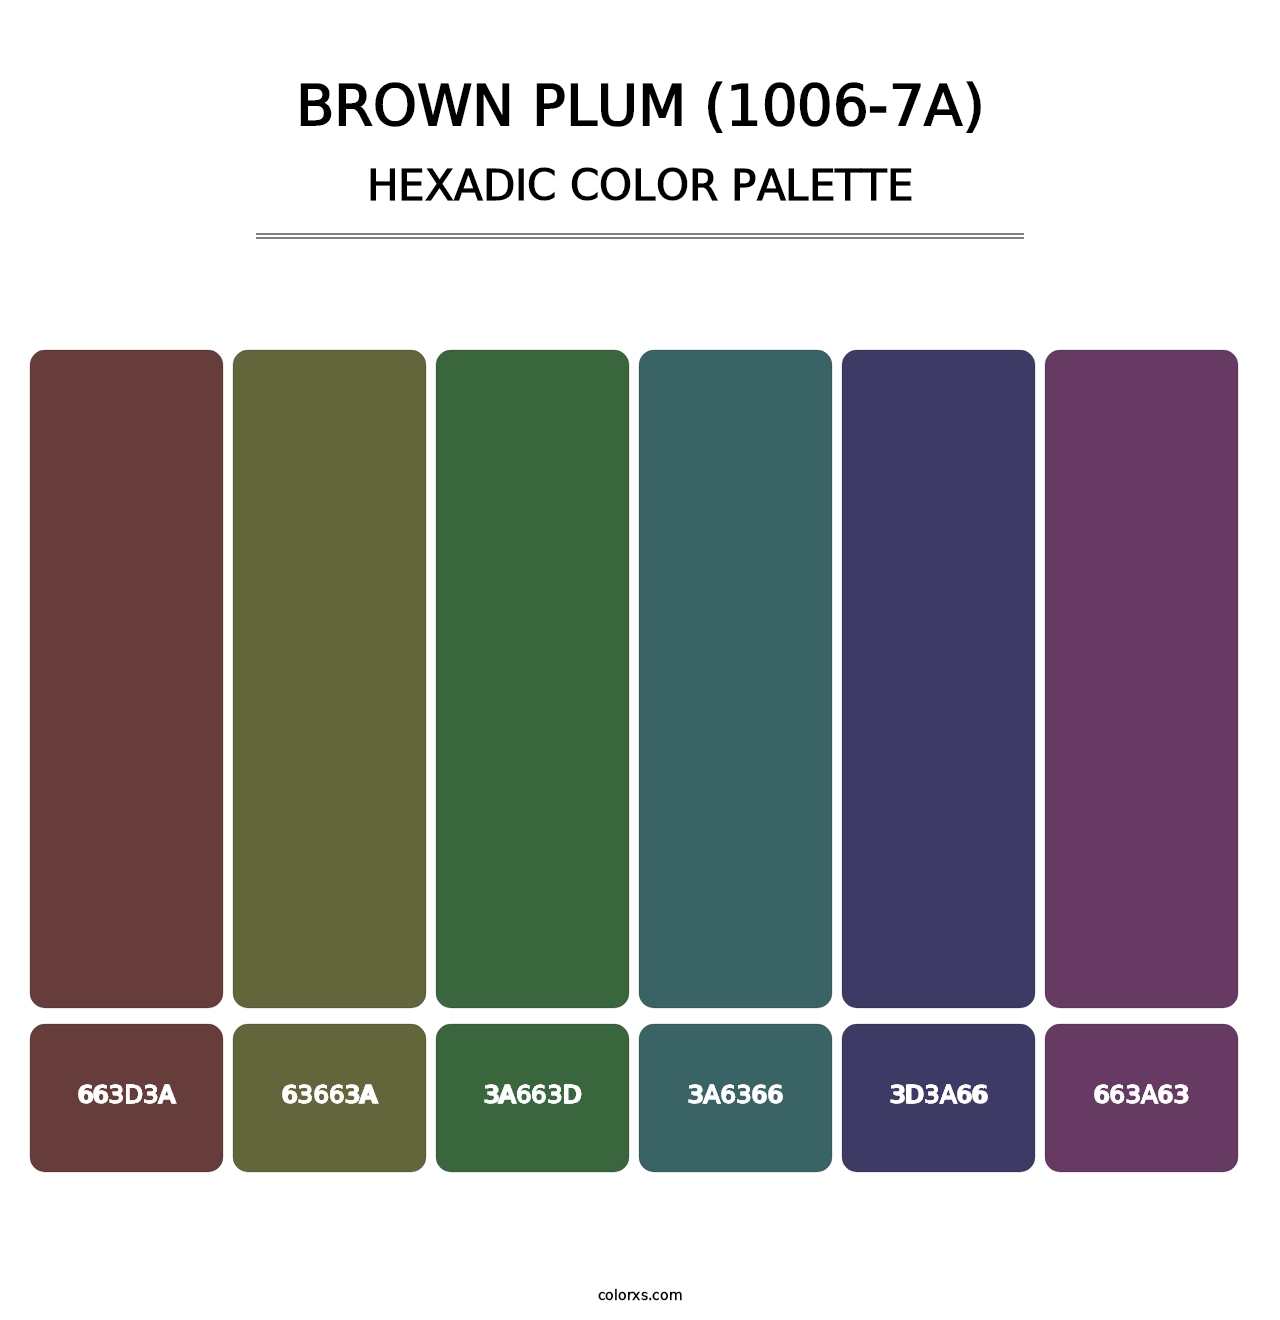 Brown Plum (1006-7A) - Hexadic Color Palette